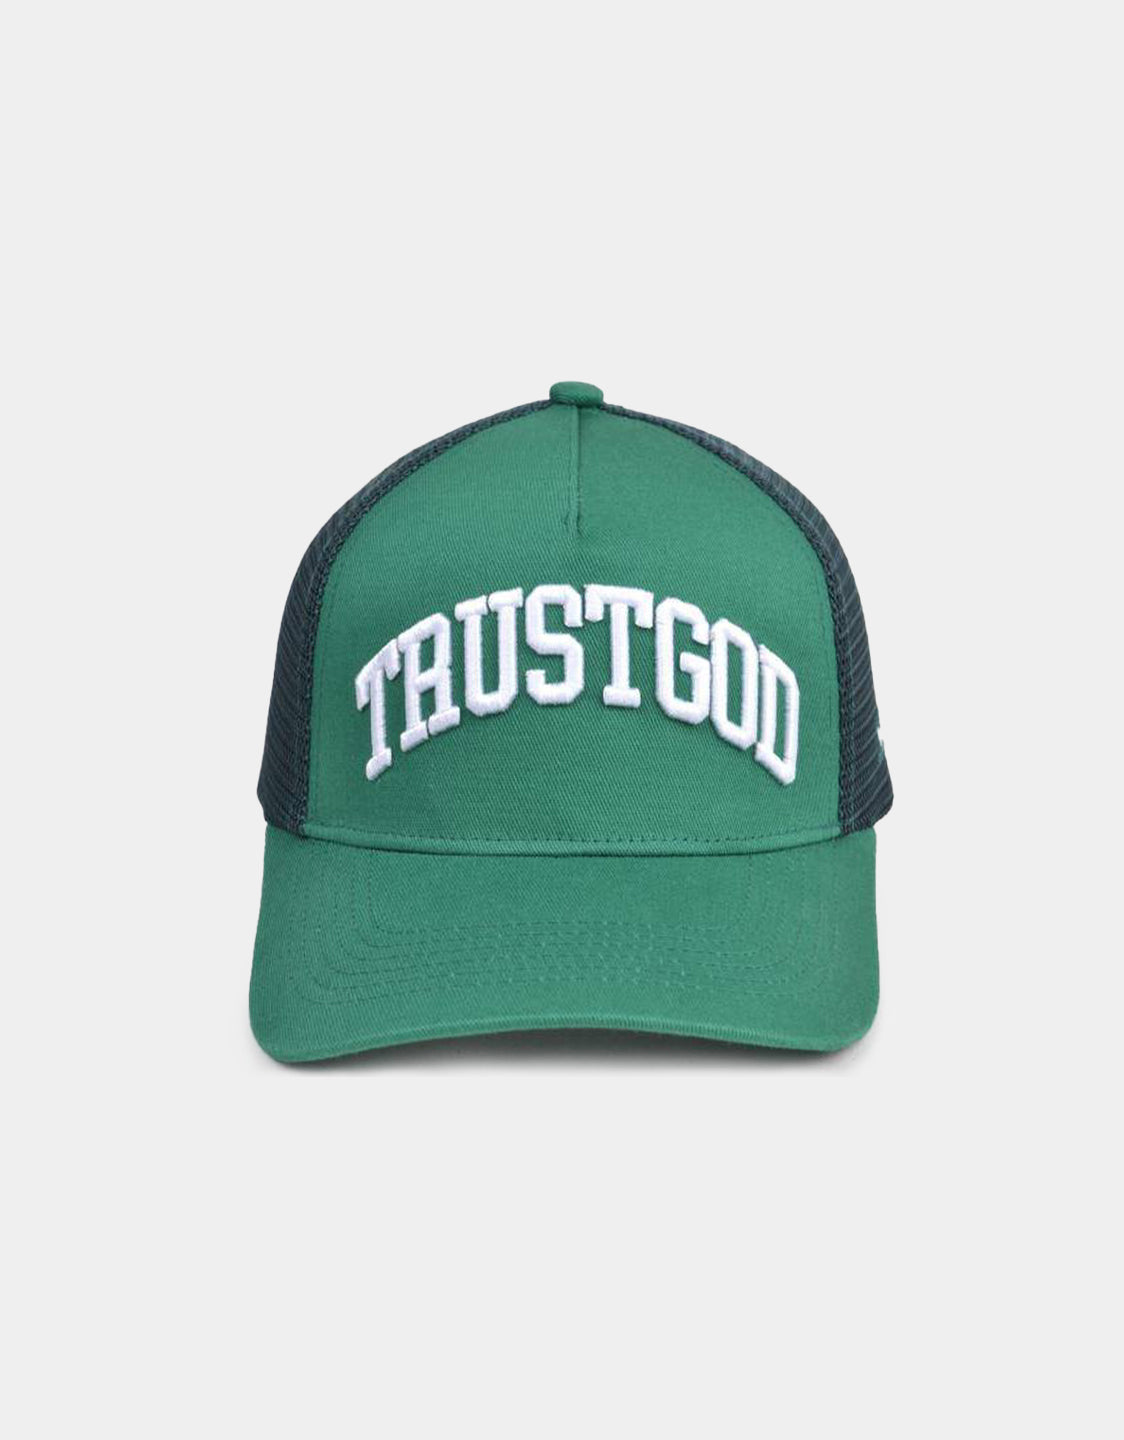 Trust God Premium Trucker Hat - Forest Green - VOTC Clothing